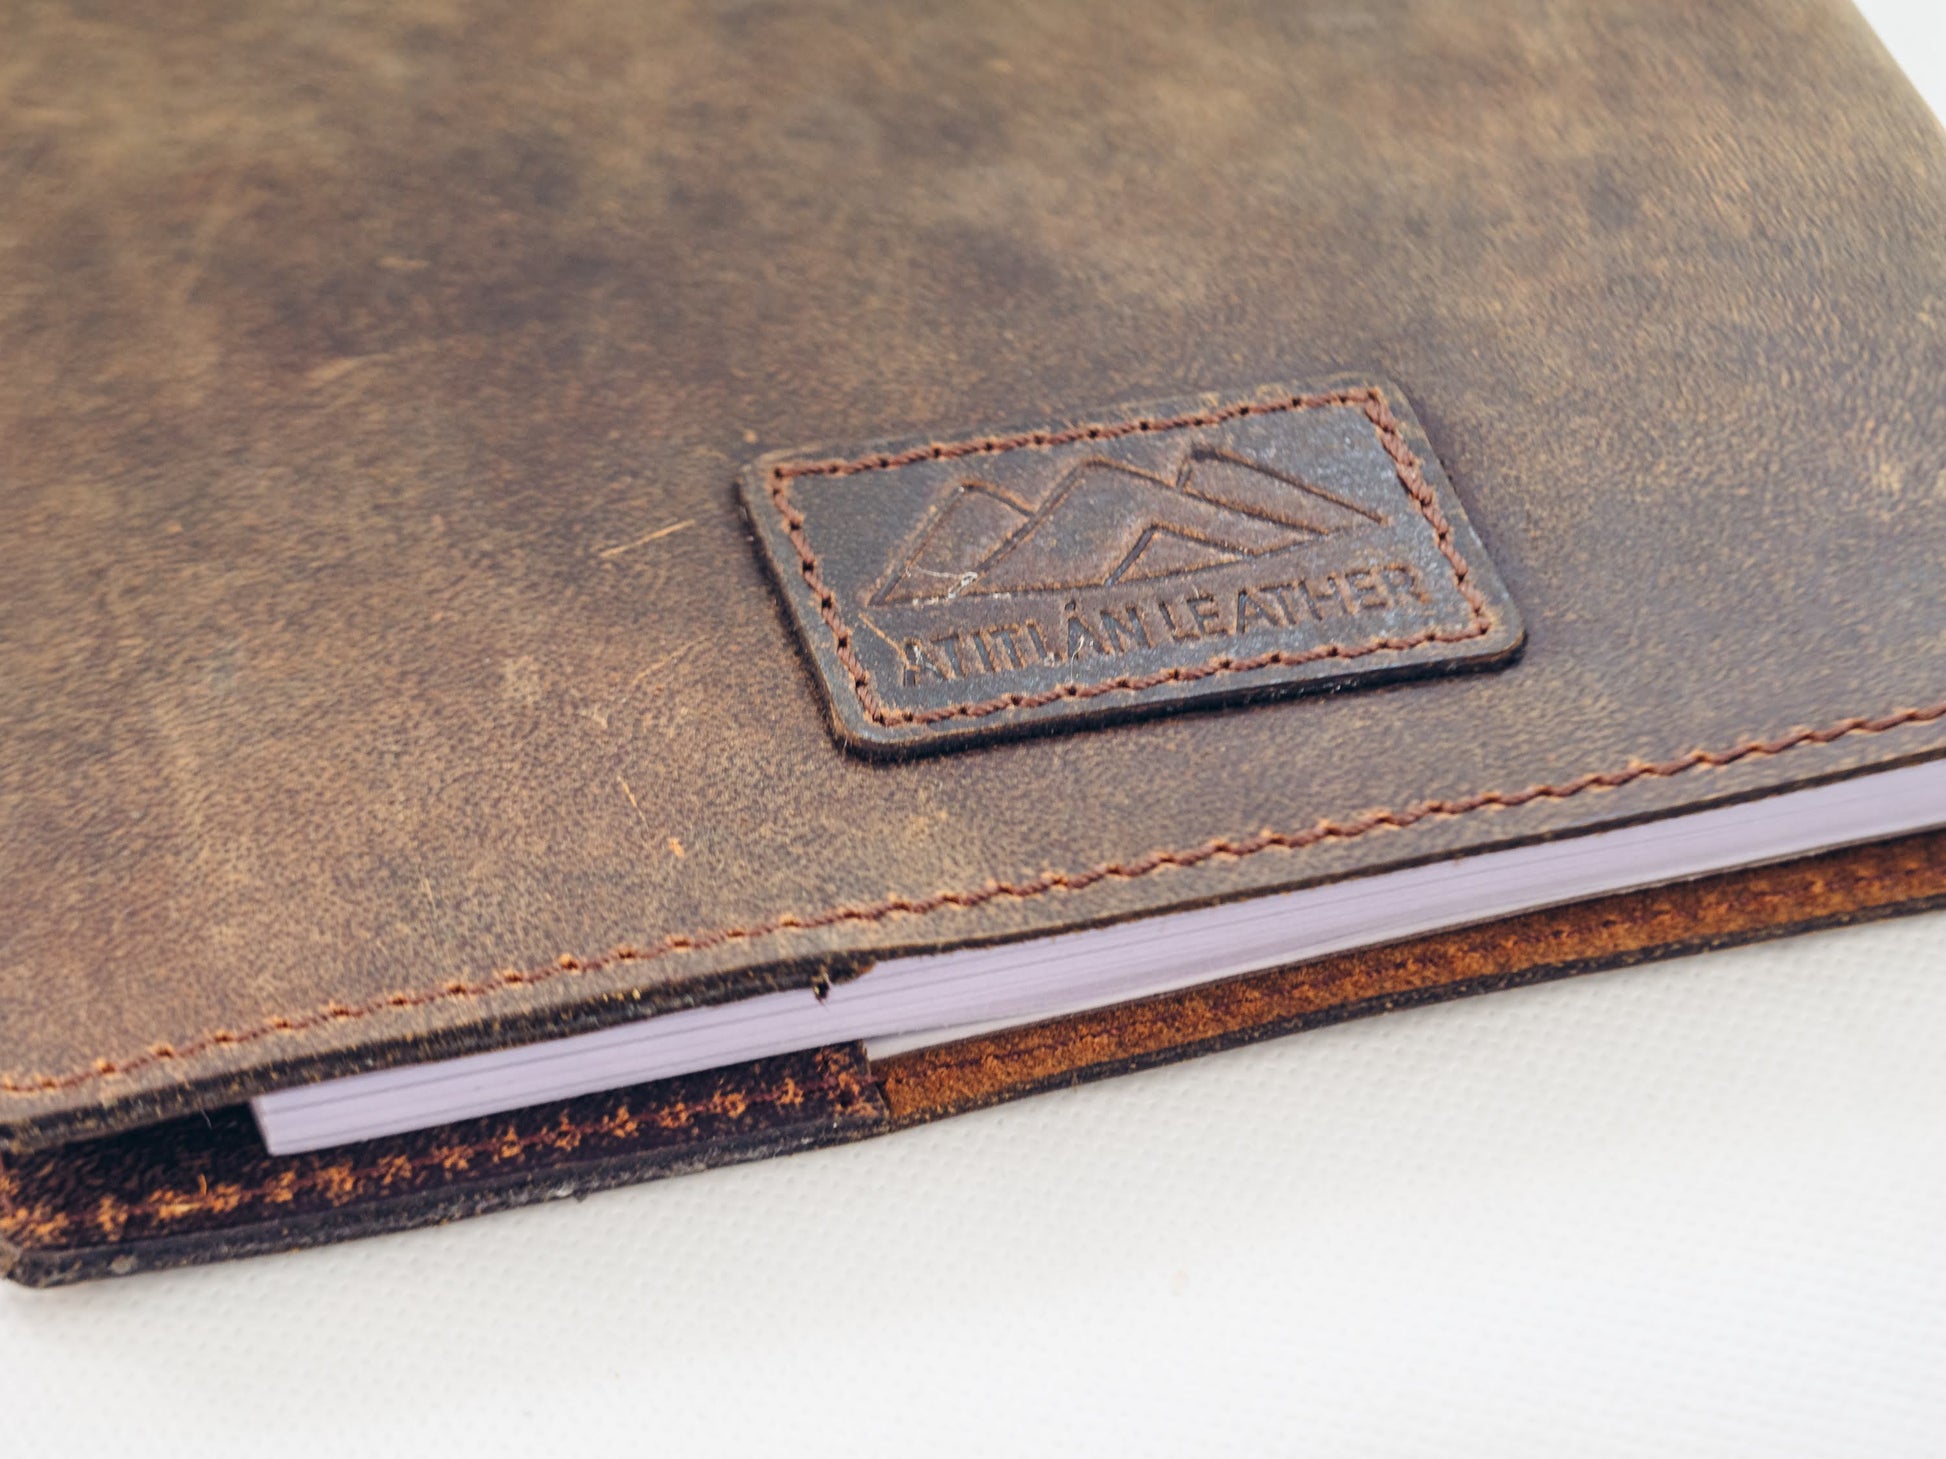 Leather Travel Journal - Atitlan Leather